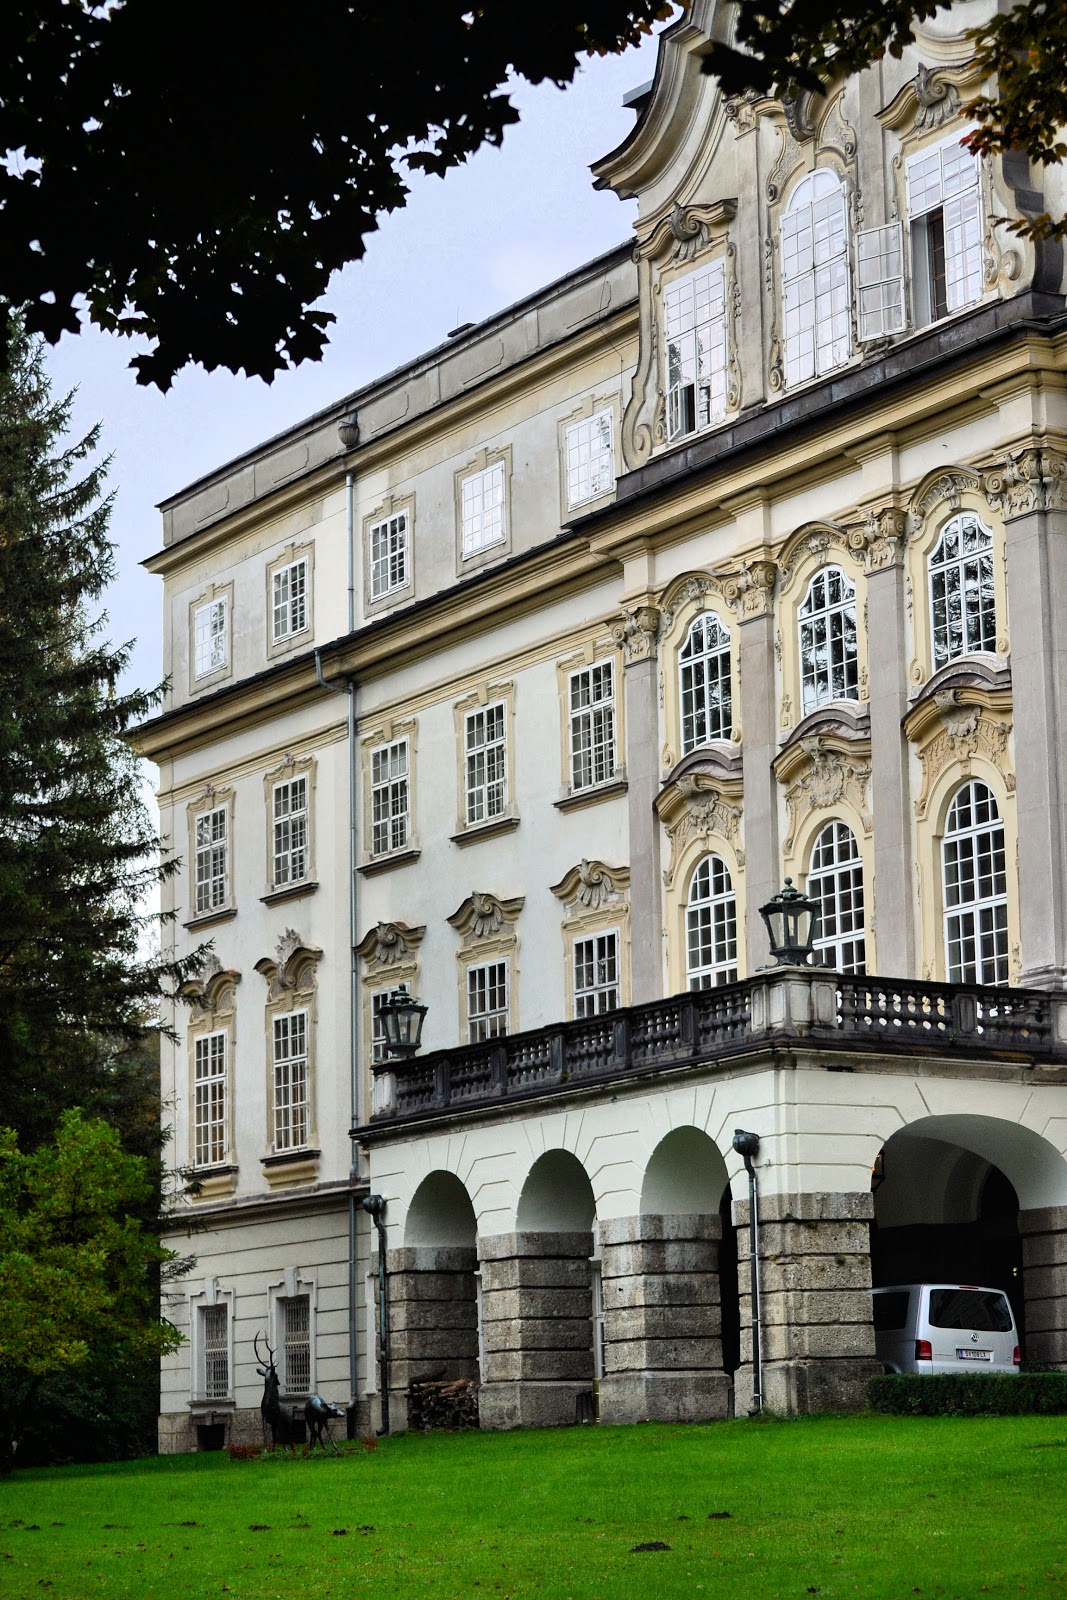 Leopoldskron Palace dates back to 1736.